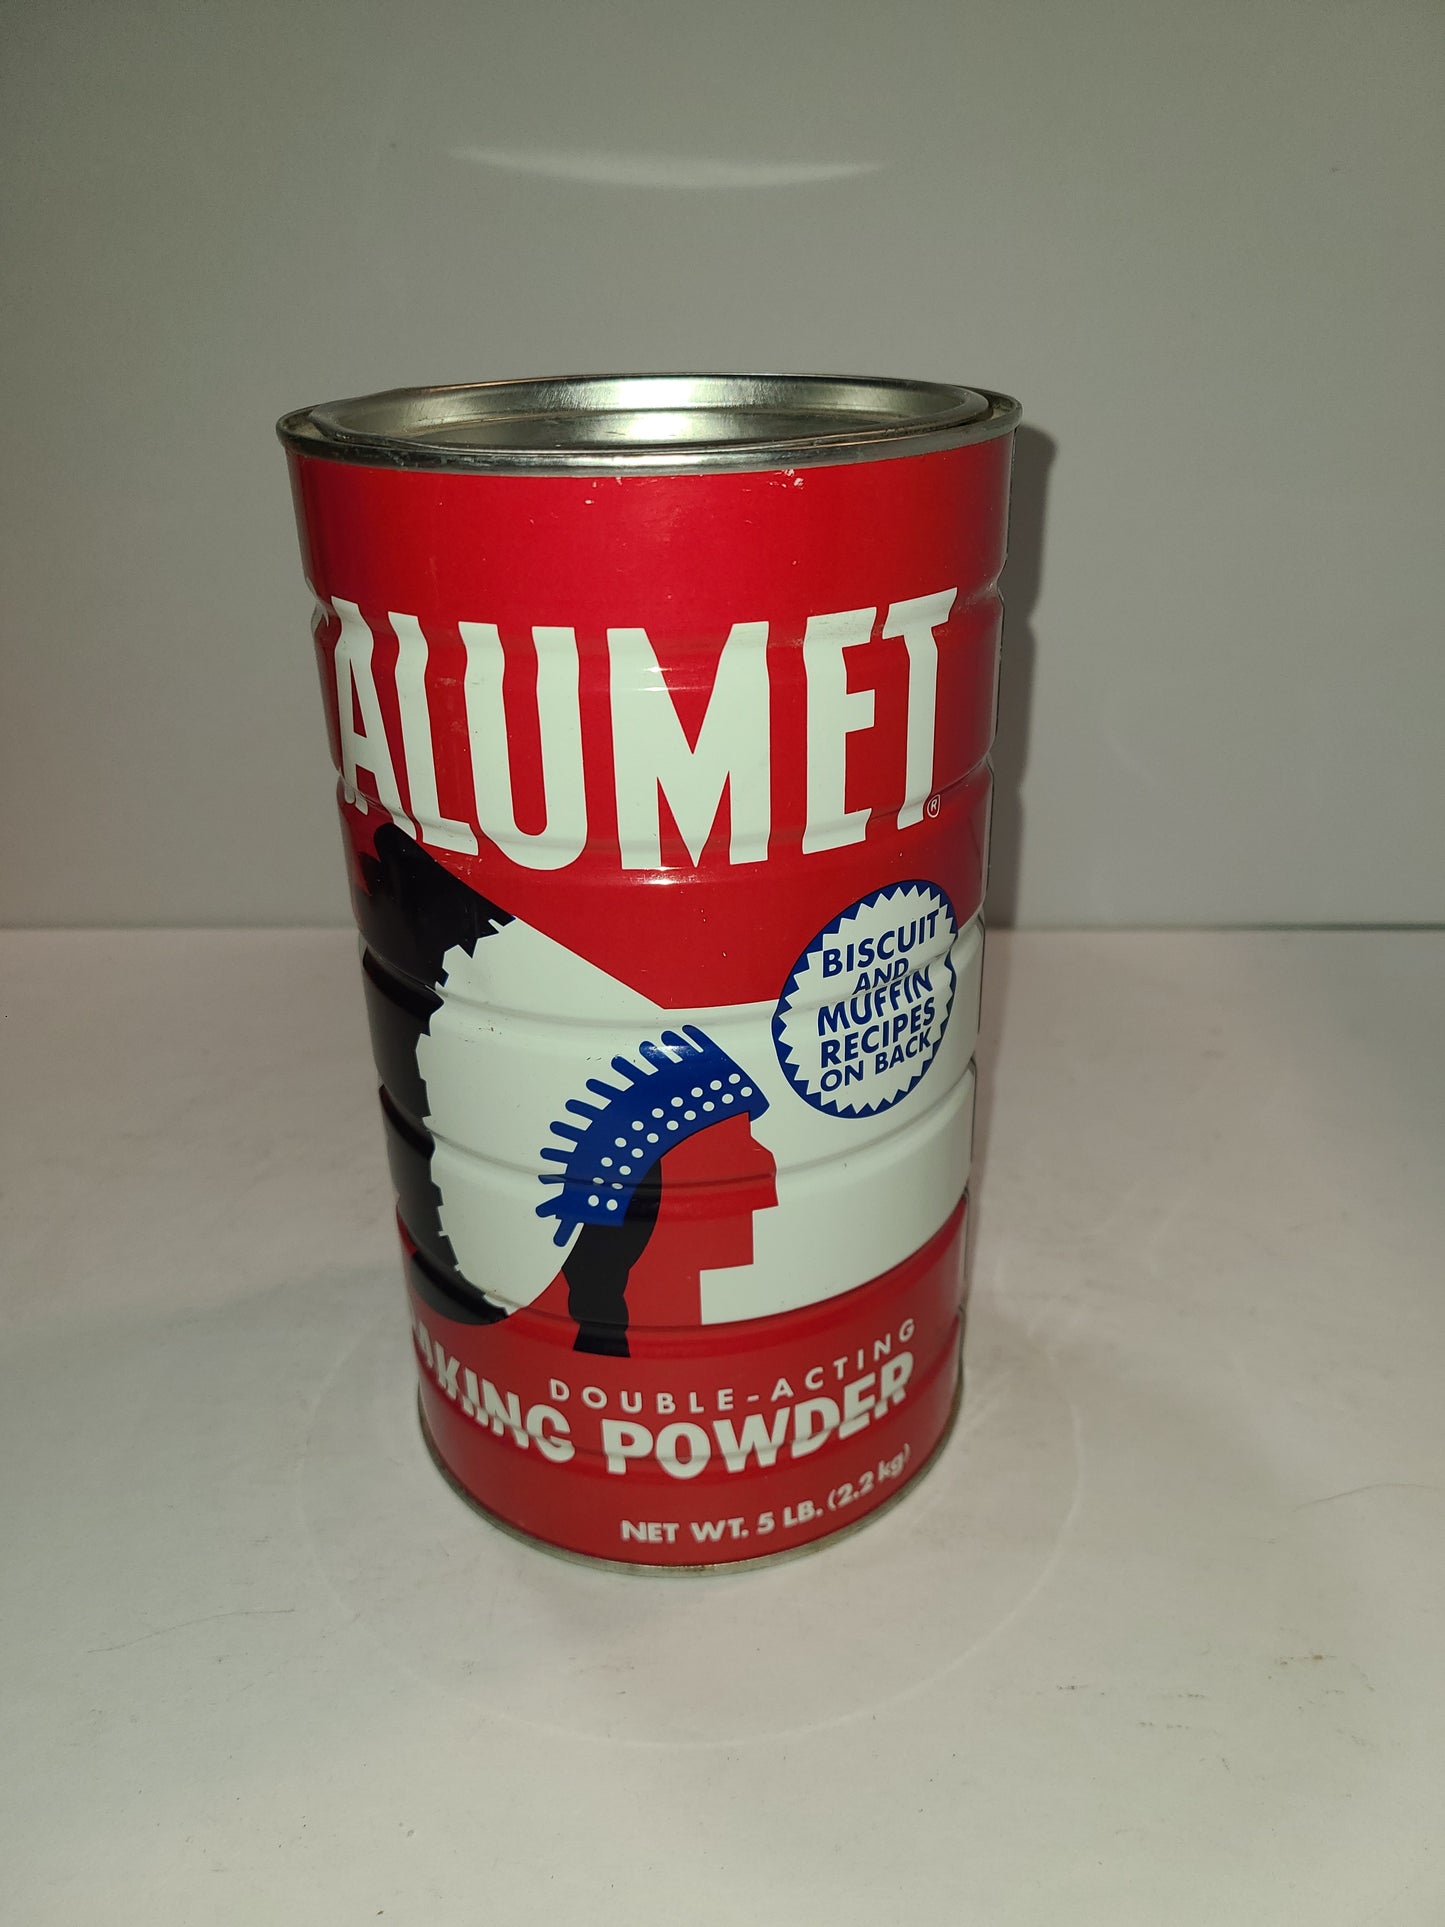 Vintage Calmet baking powder